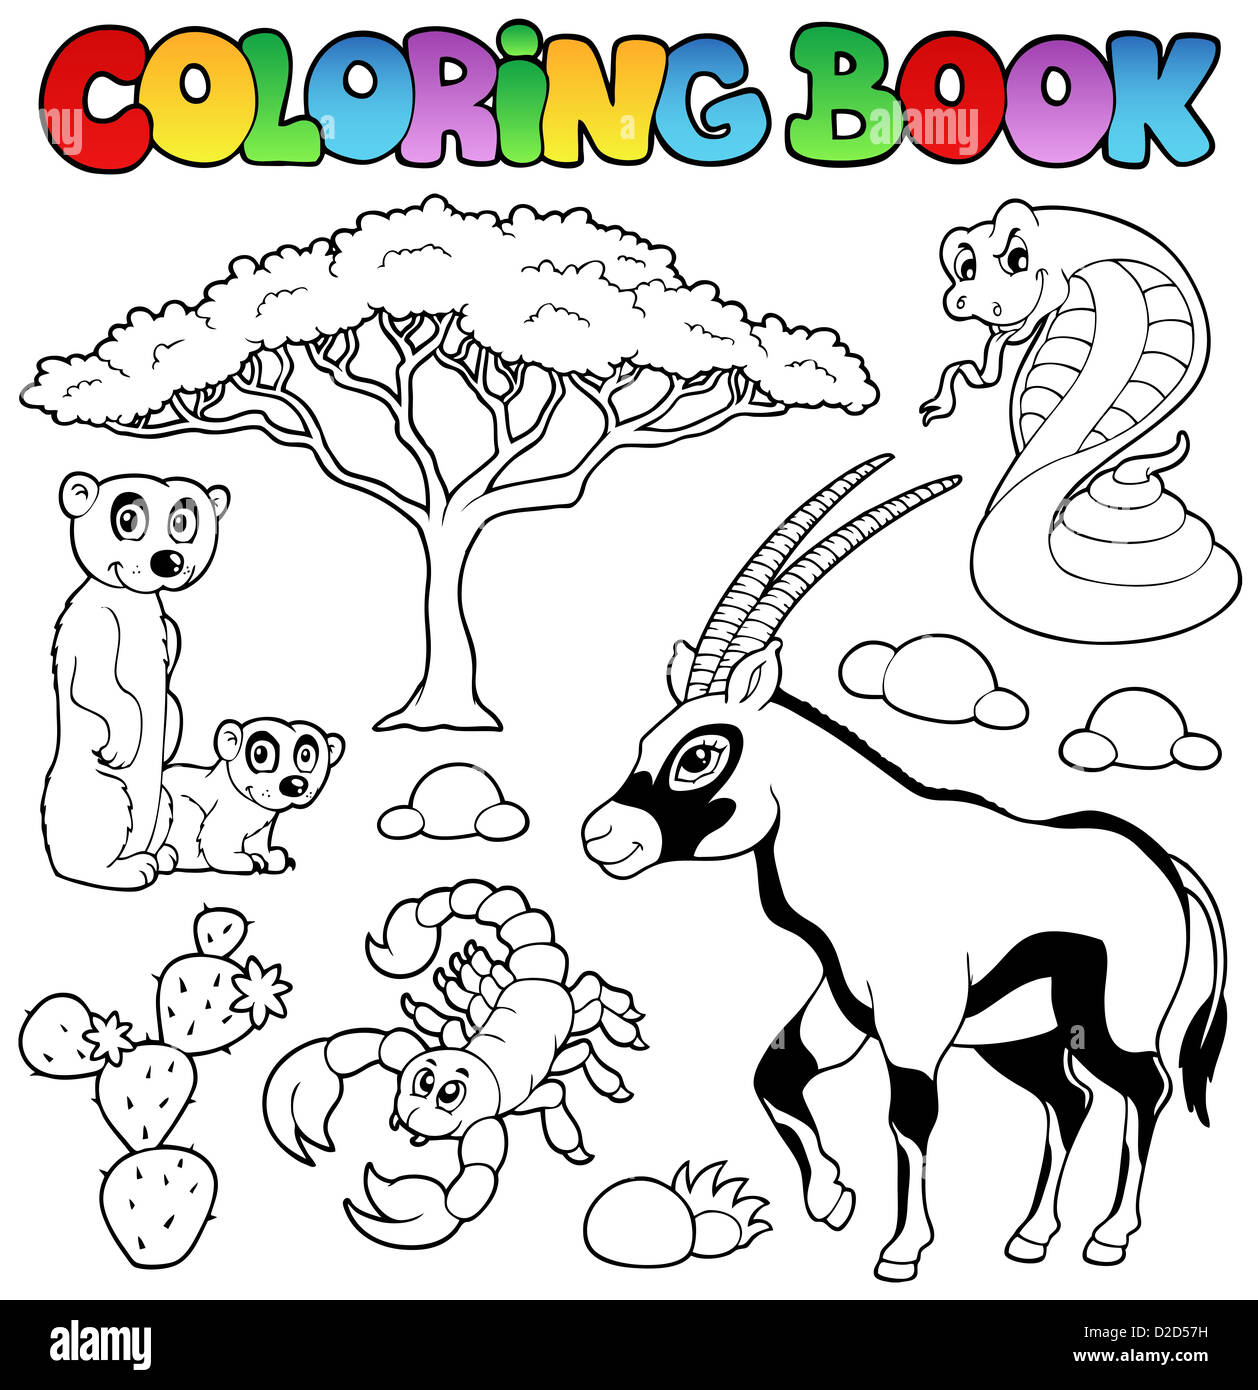 Coloring book savannah animals 1 - picture illustration. Stock Photo